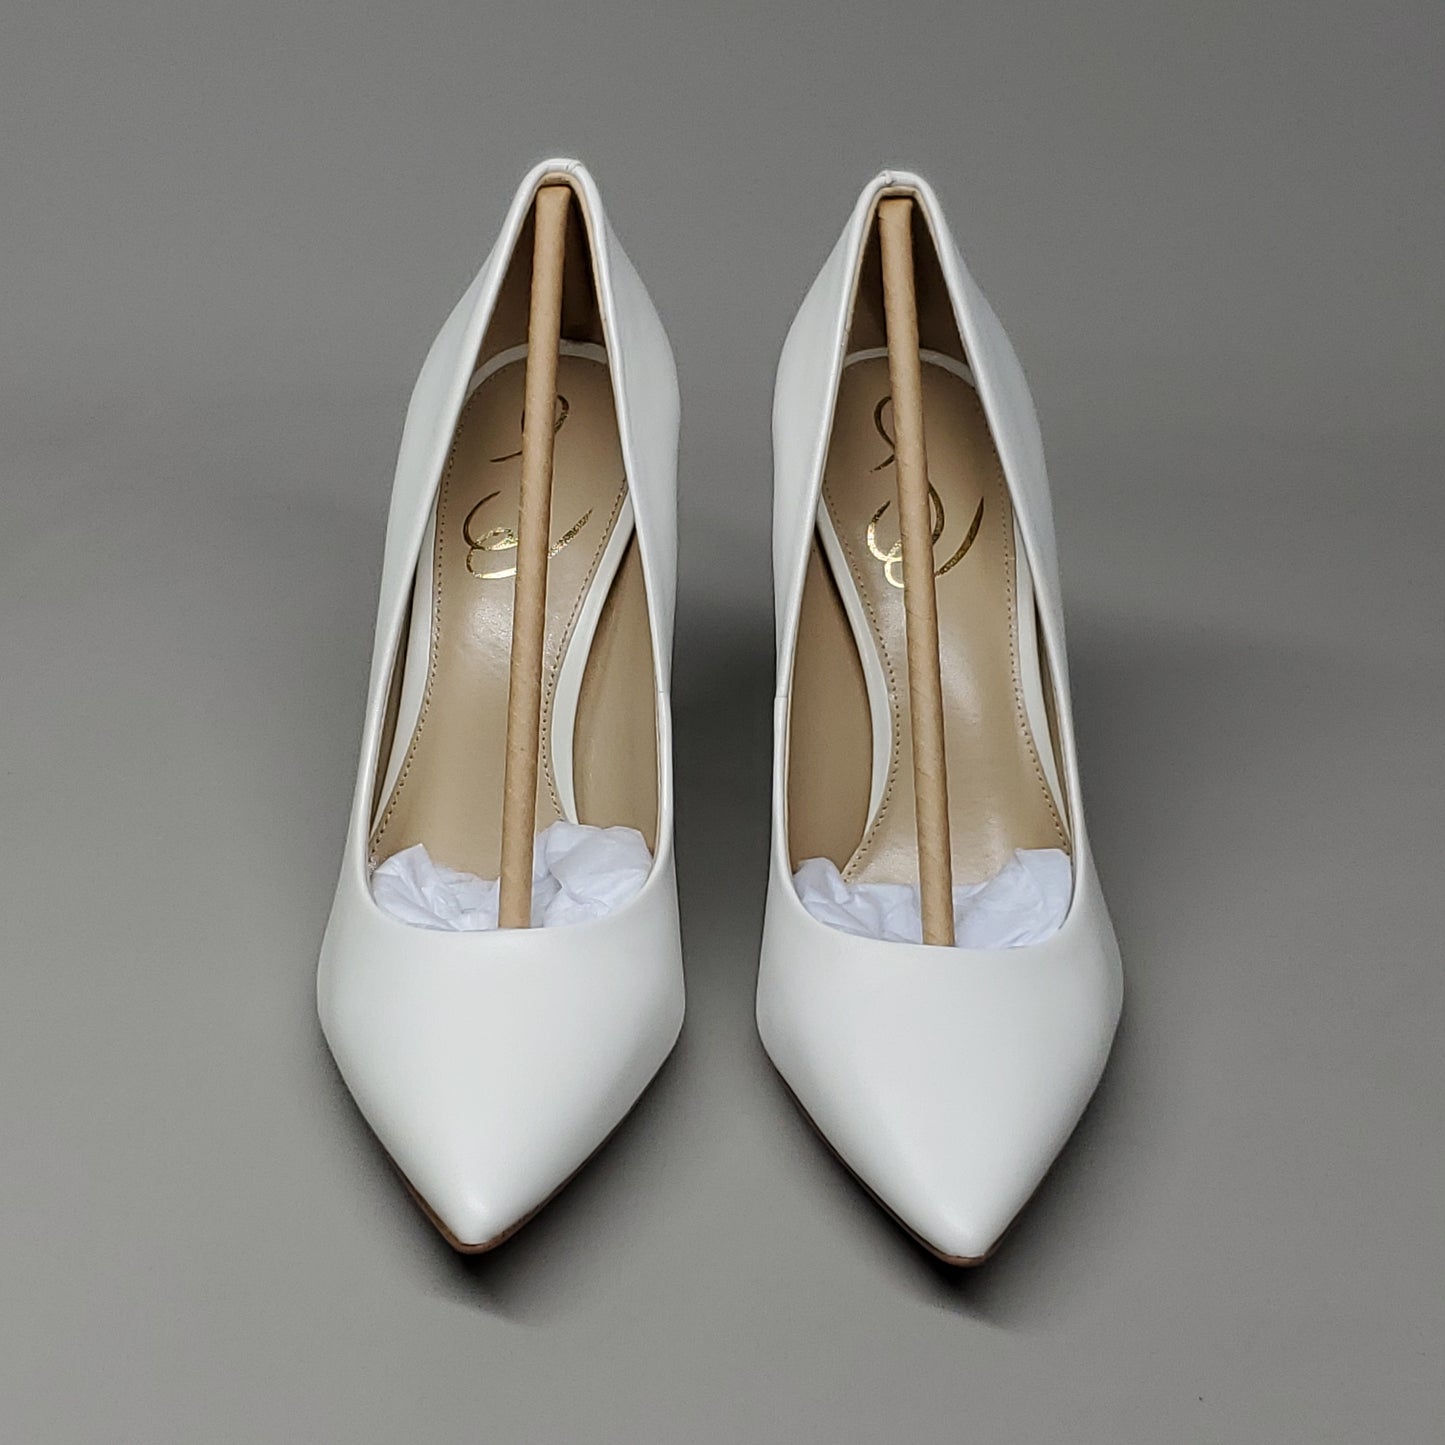 SAM EDELMAN Hazel High Heel Leather Shoes Women's Sz 8 Bright White E5638LC102 (New)